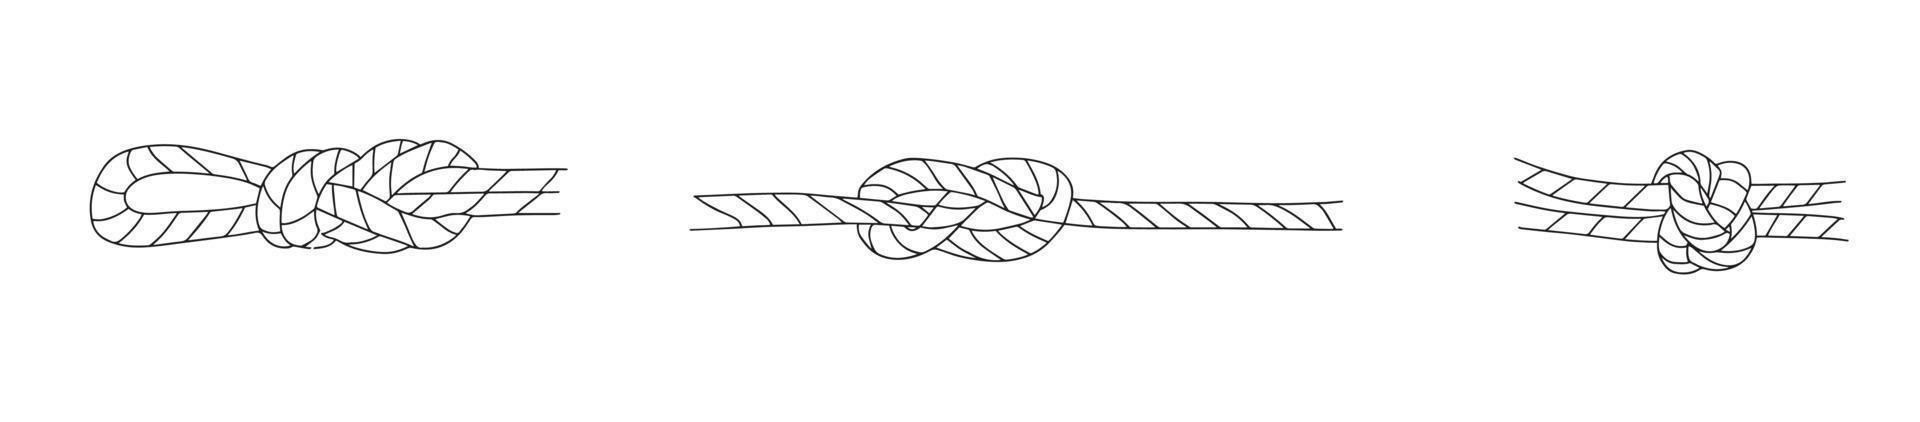 conjunto de nós de corda, engates, arcos, curvas isoladas no fundo branco. desenho vetorial decorativo. vetor